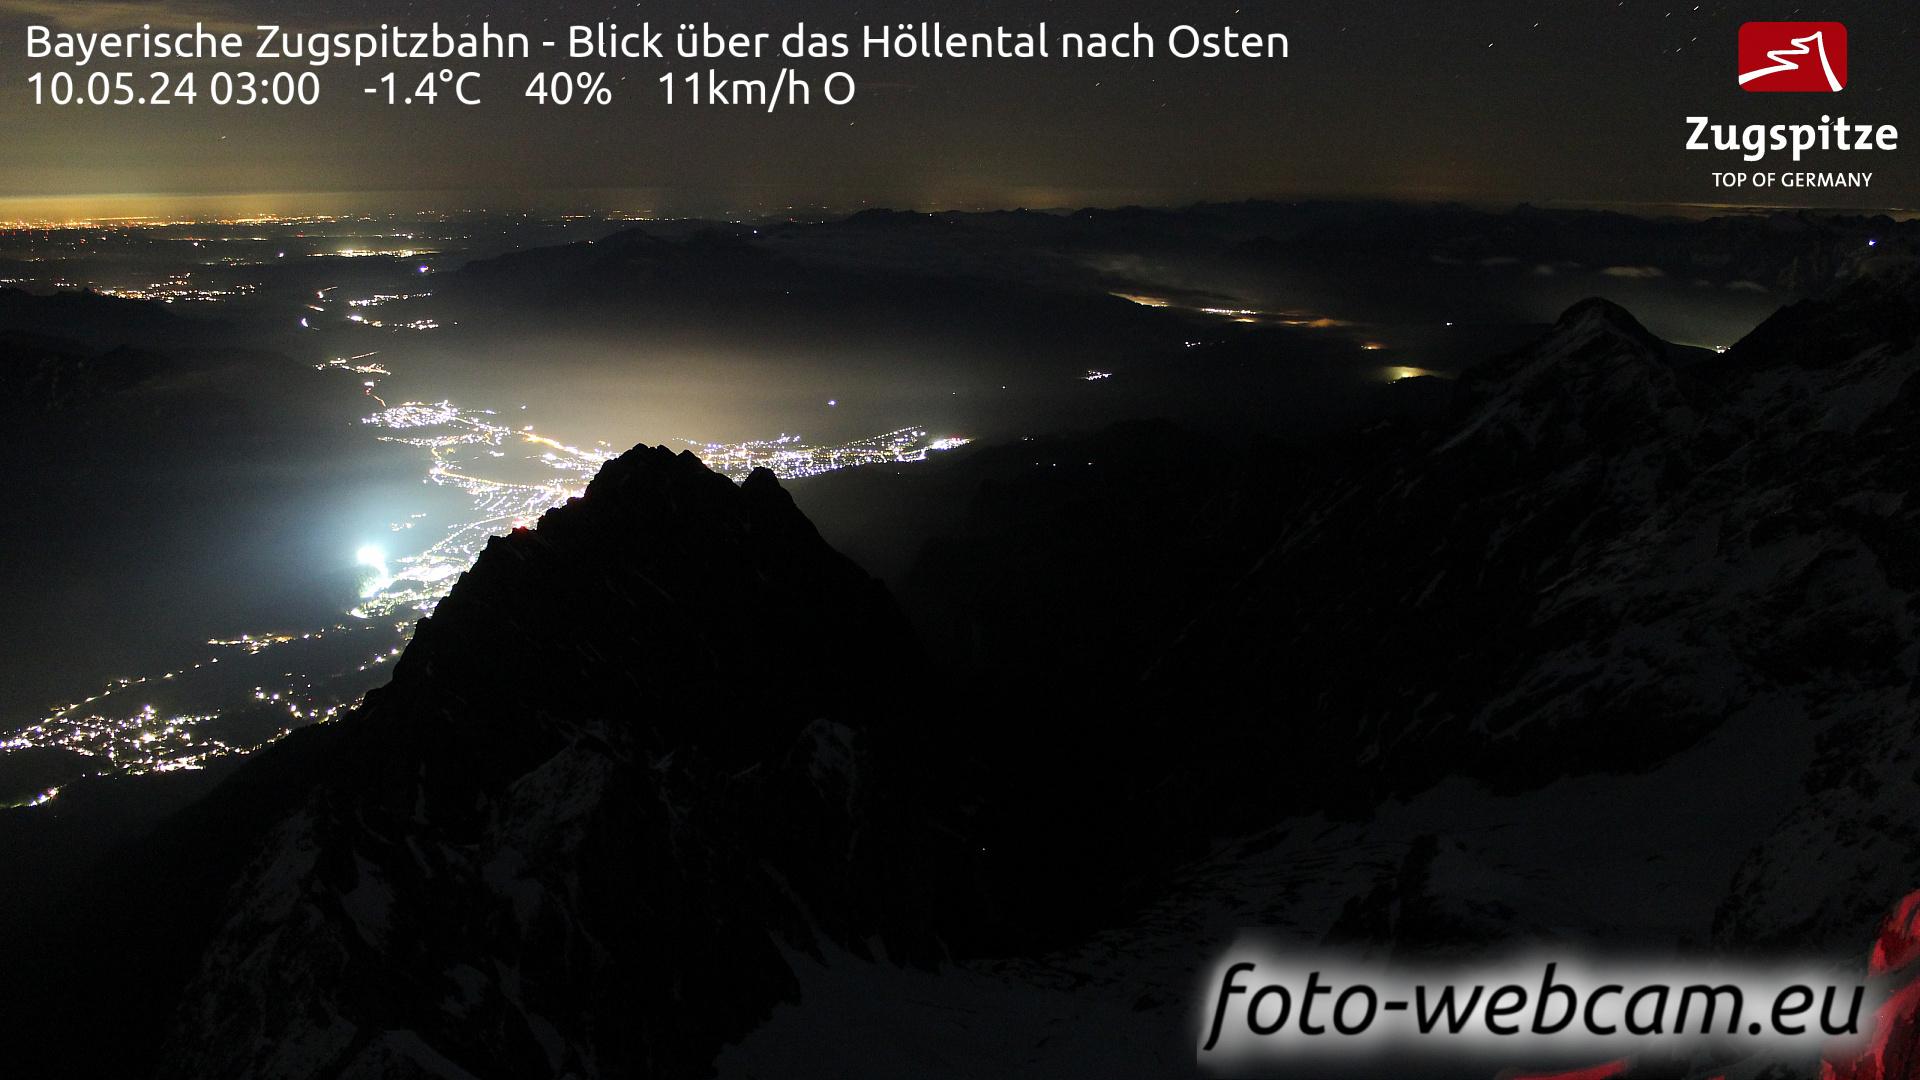 Zugspitze Dom. 03:05